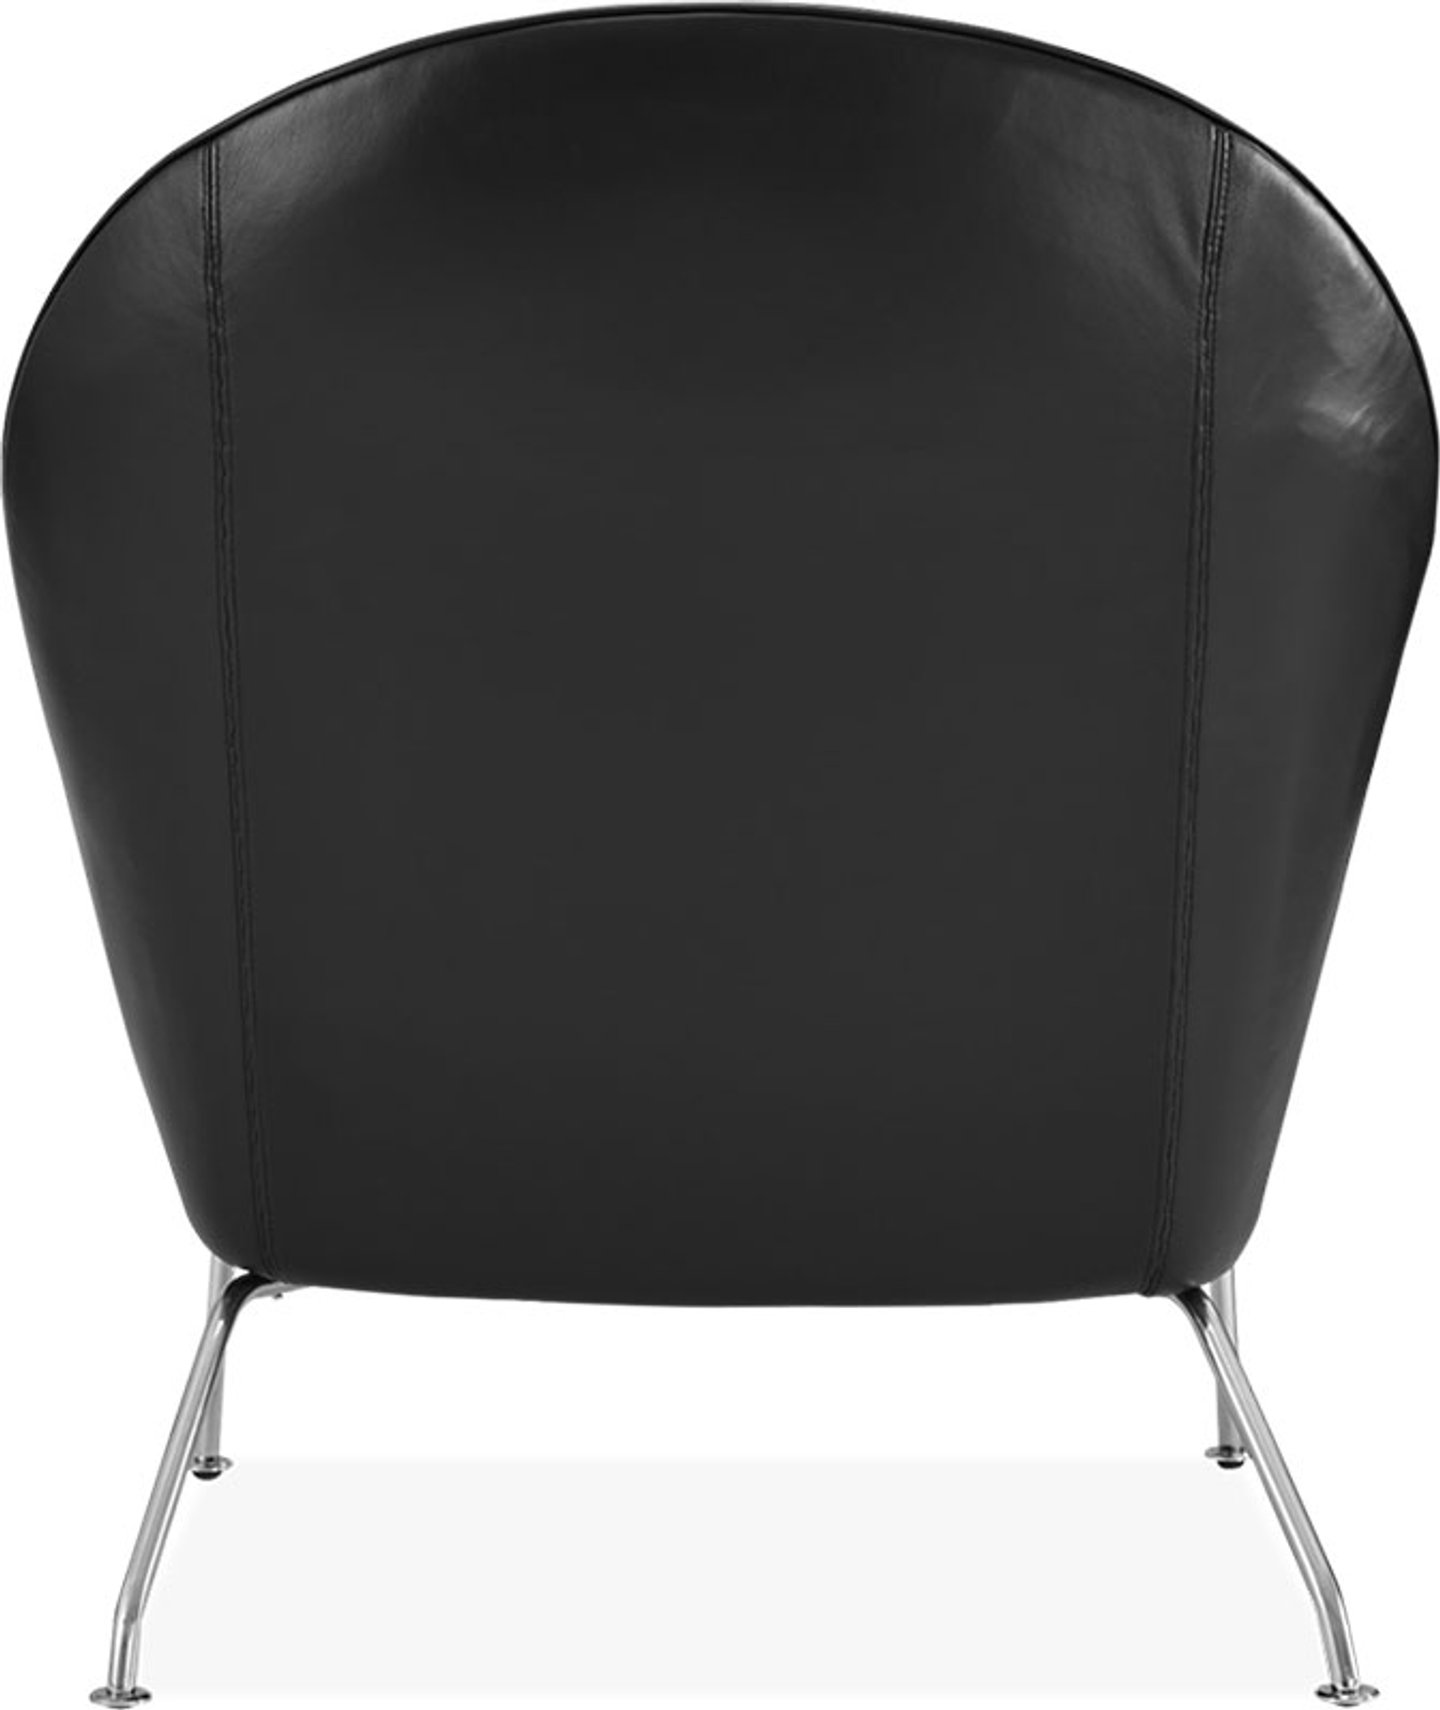 Oculus-Stuhl Premium Leather/Black  image.